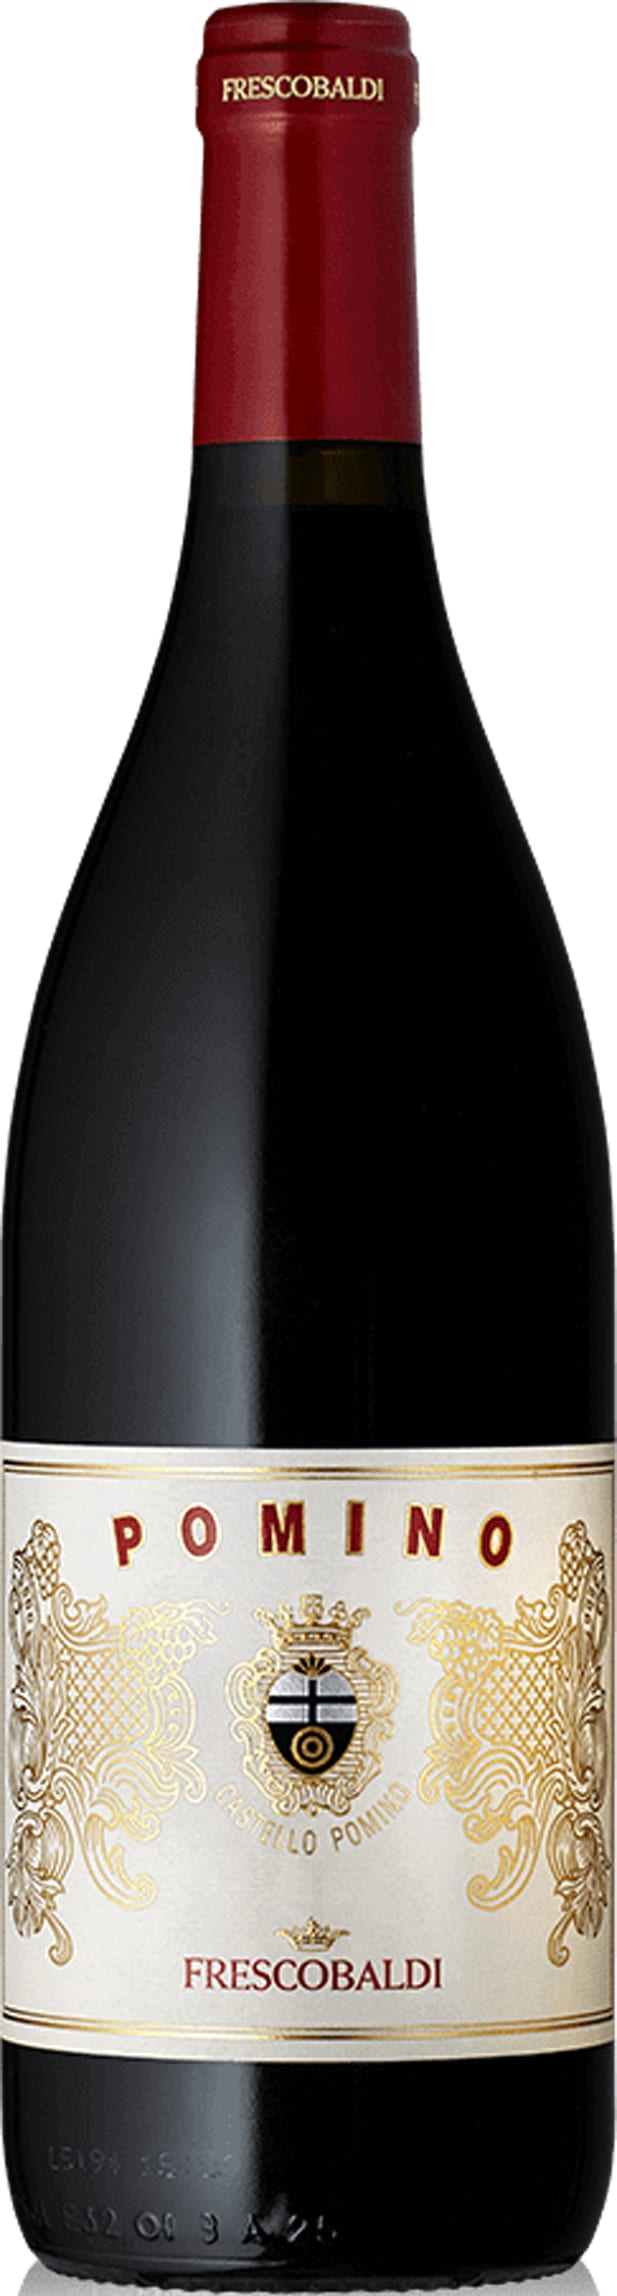 Frescobaldi Pomino Pinot Nero 2021 75cl - Buy Frescobaldi Wines from GREAT WINES DIRECT wine shop